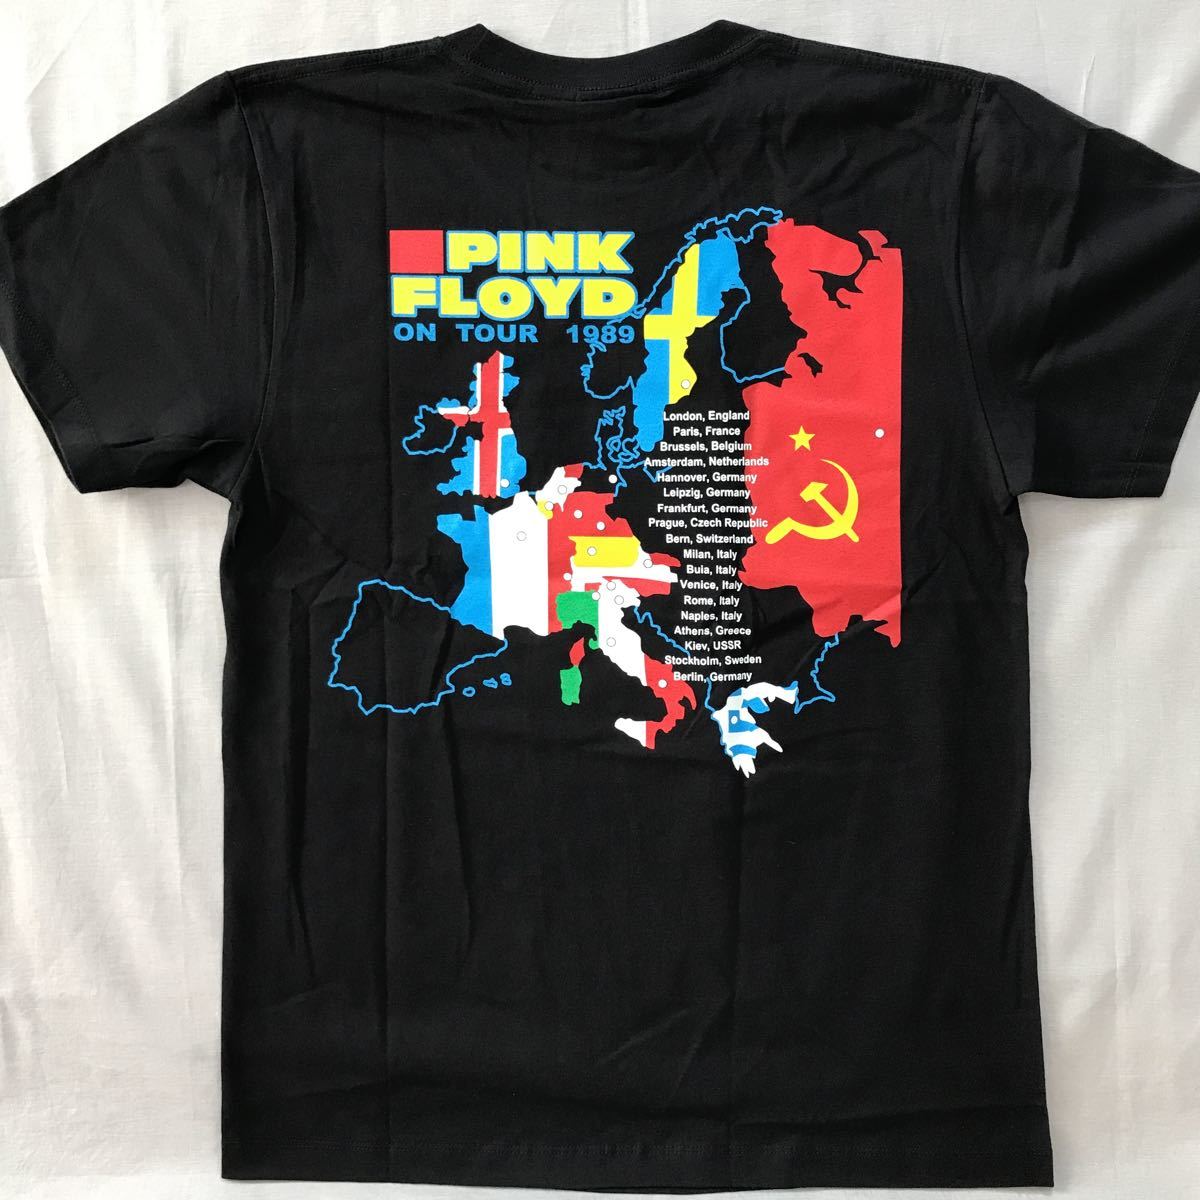 Pink Floyd ピンク・フロイド 狂気 ロンT バンドTシャツ(M)ケ14 - Tシャツ